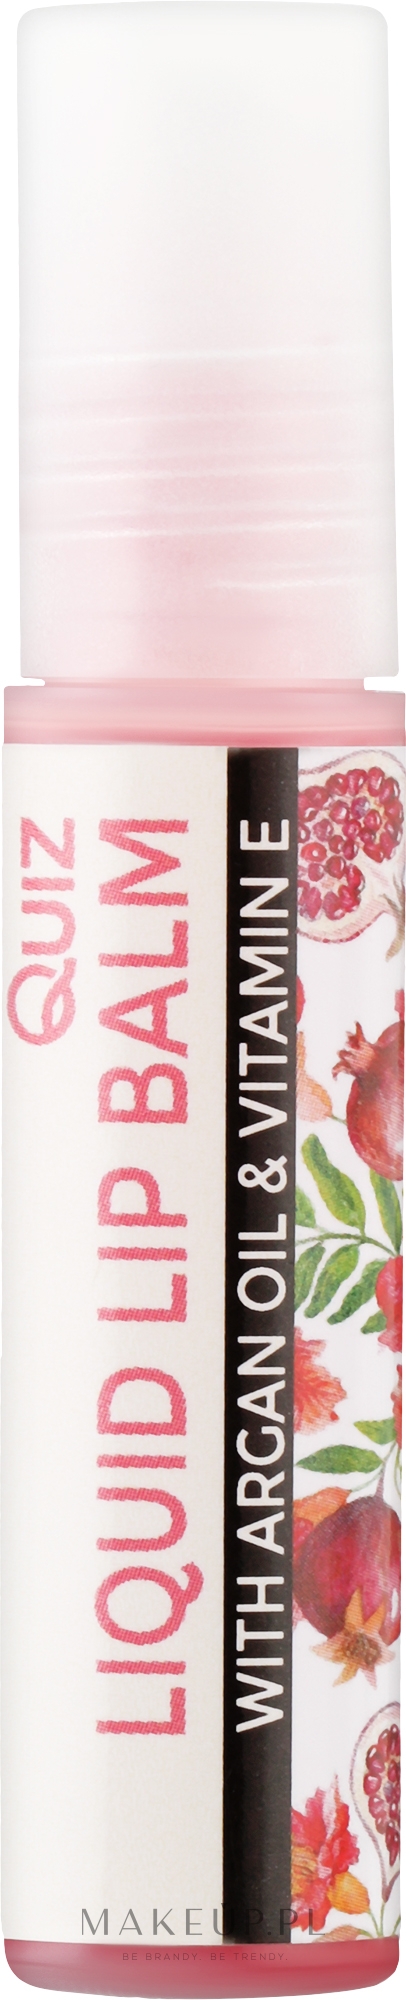 Balsam do ust Granat - Quiz Cosmetics Liquid Lip Balm With Argan Oil & Vitamin E — Zdjęcie 10 ml